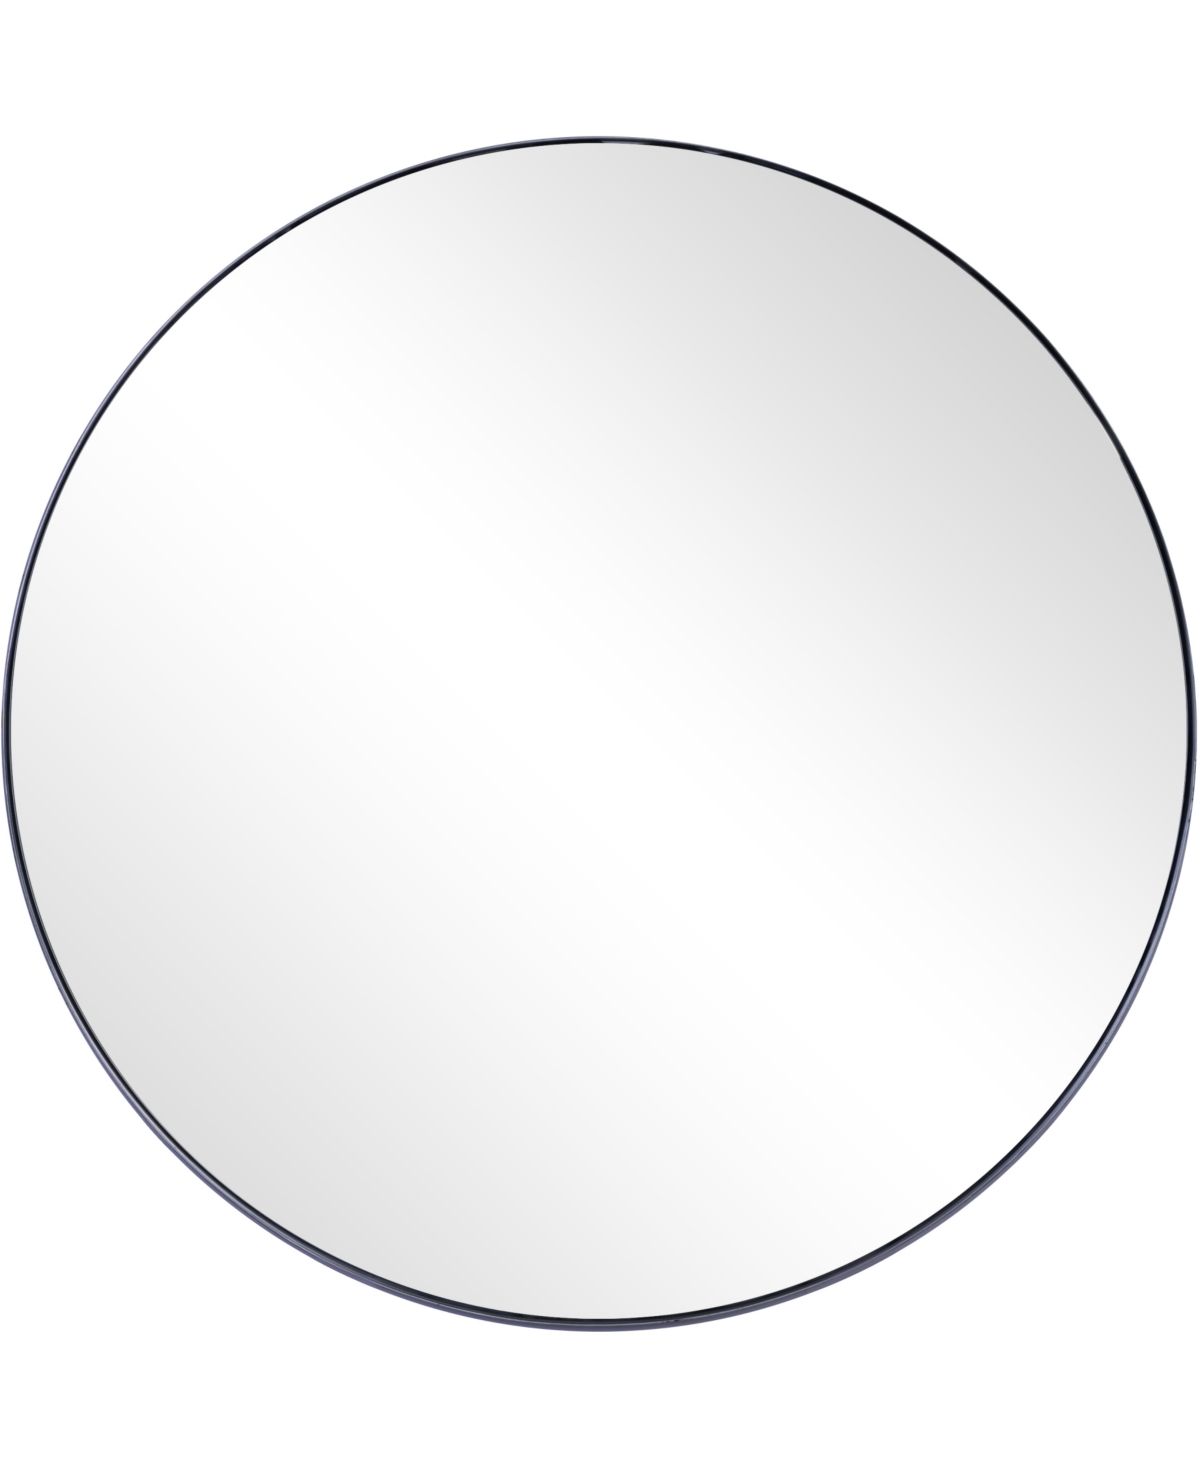 Round Metal Frame Mirror - Black